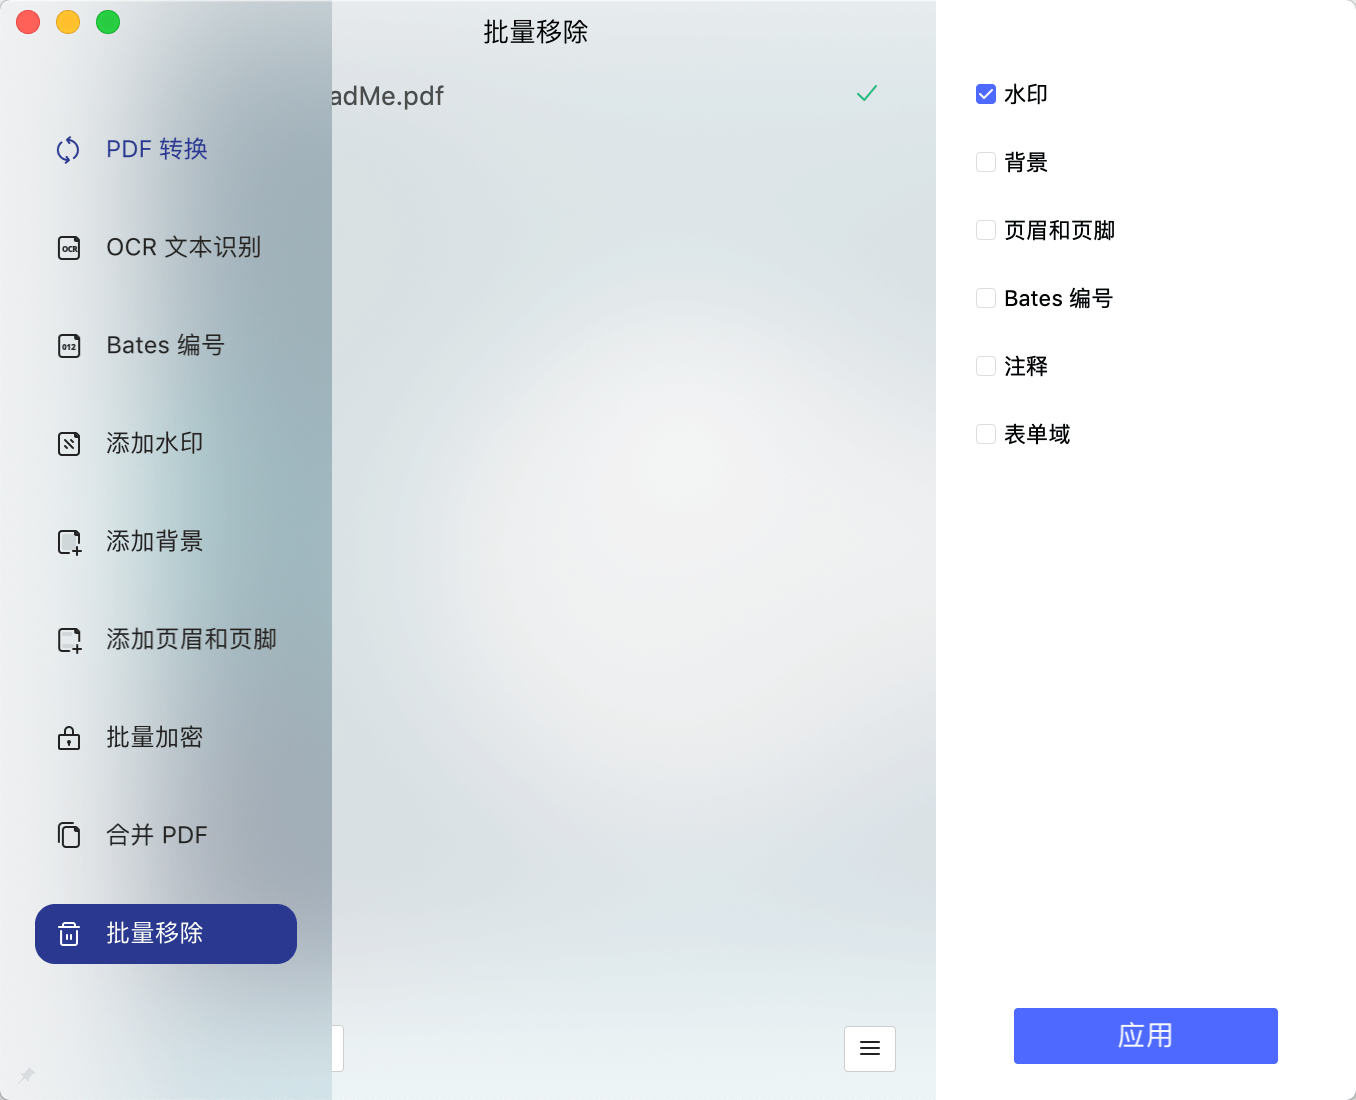 Wondershare PDFelement Pro for mac 9.1.0 OCR中文版